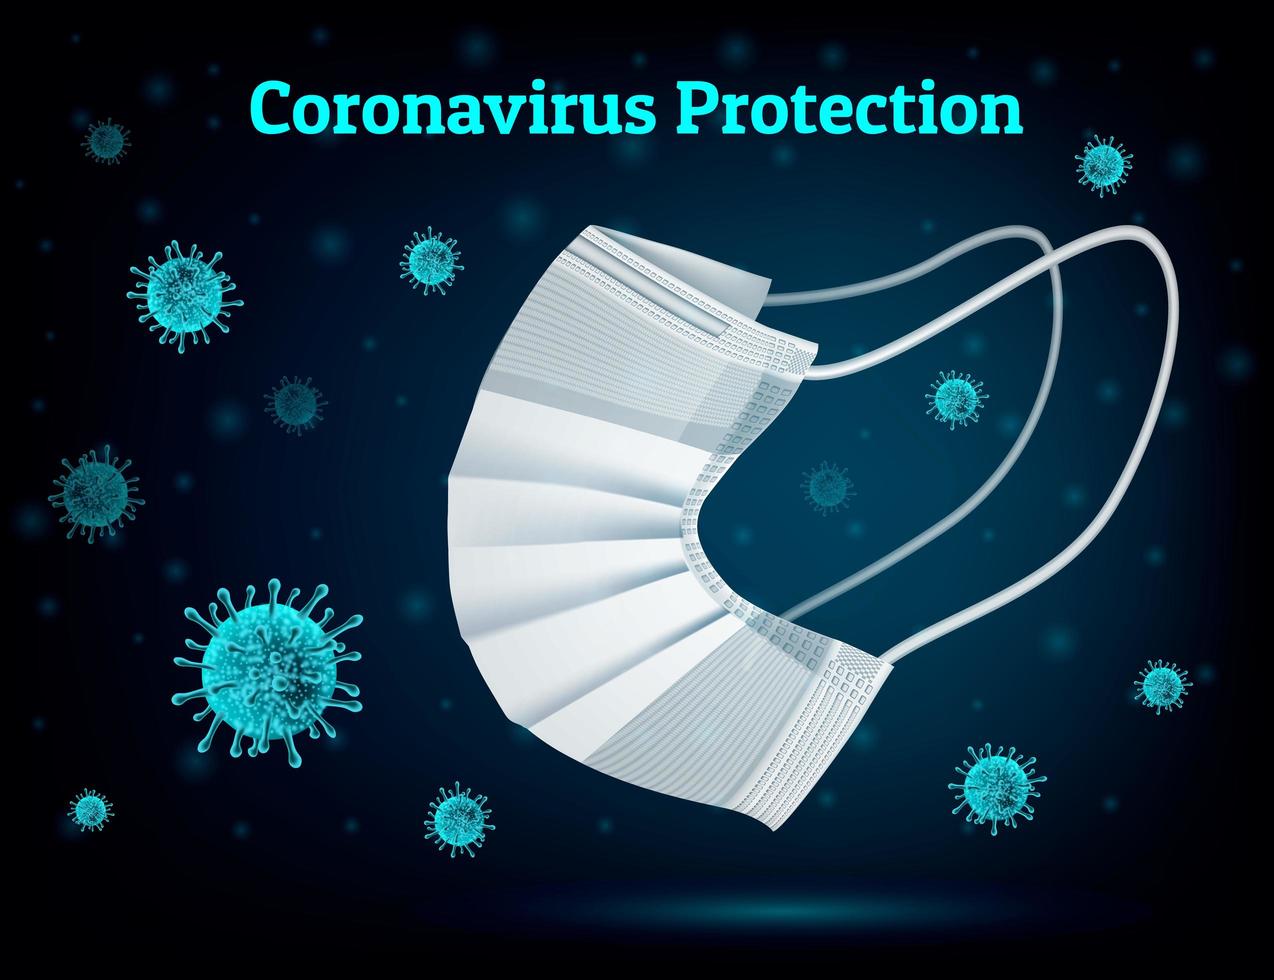 Coronavirus-Schutzplakat mit Maske vektor